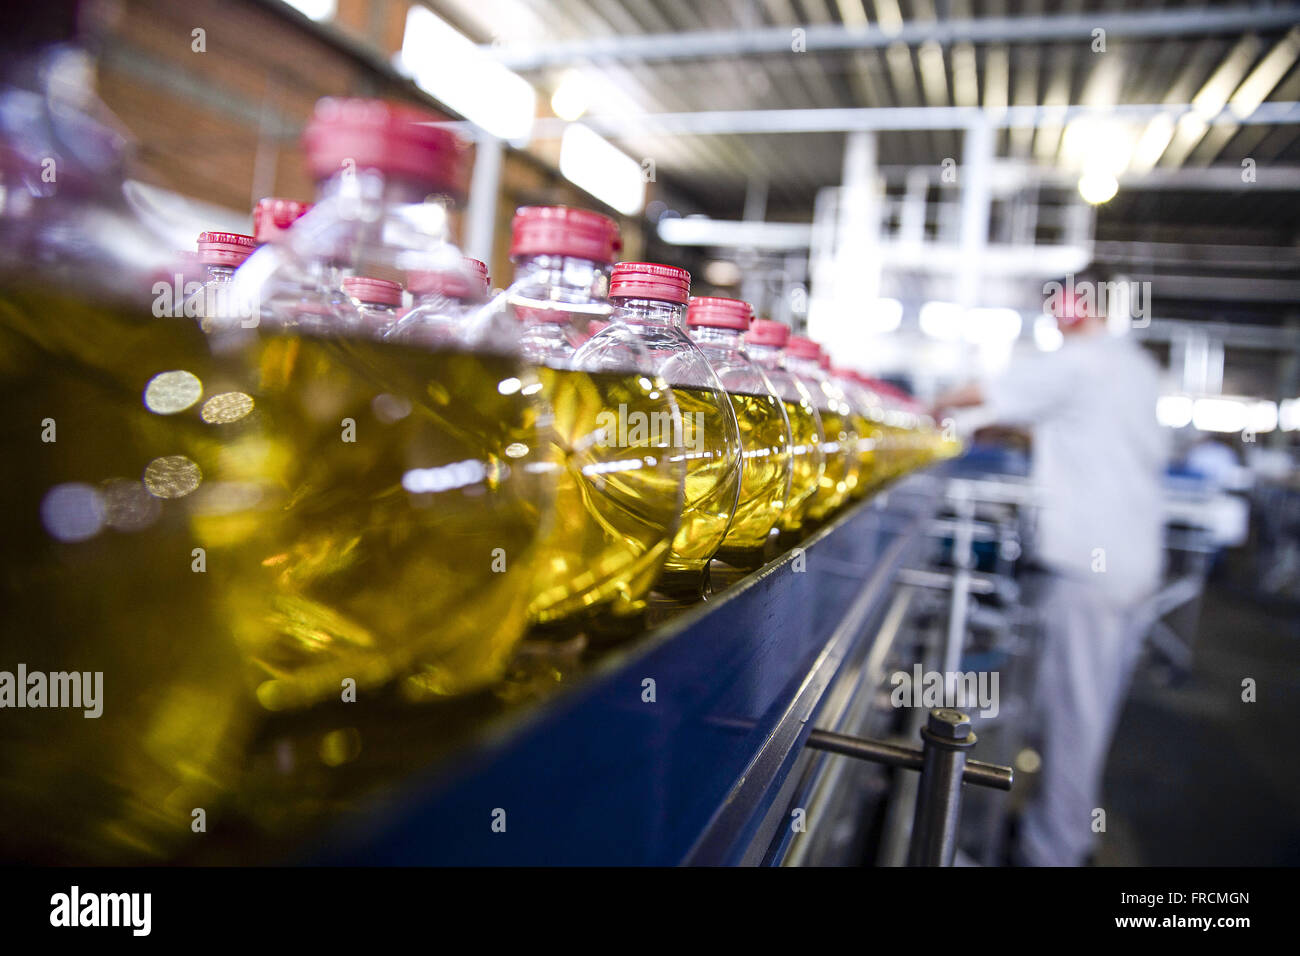 Detalhe de envase de garrafas de óleo vegetal de soja em cooperativa Stock Photo